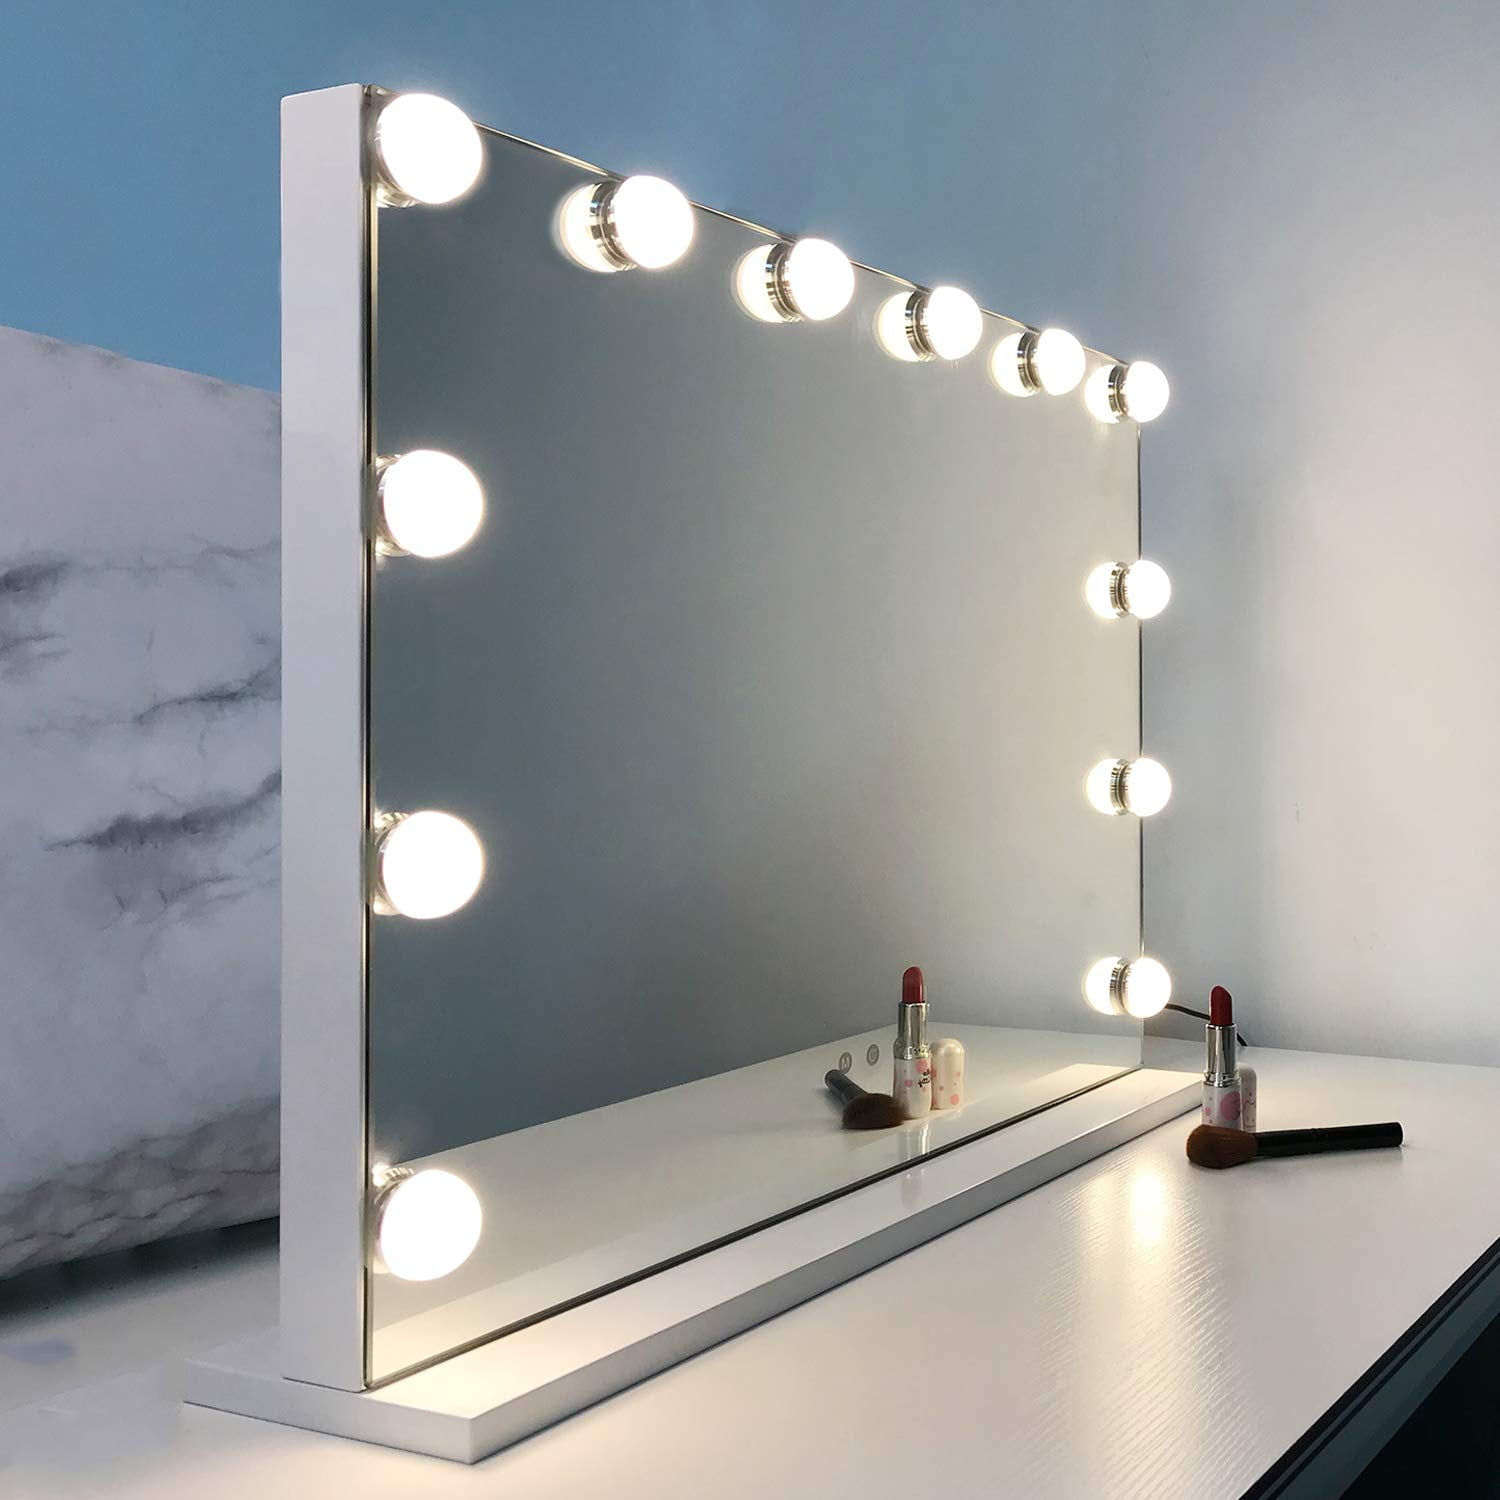 Wayking Vanity Mirror With Lights, Fenchilin Large Vanity Mirror With Lights Hollywood Lighted Makeup